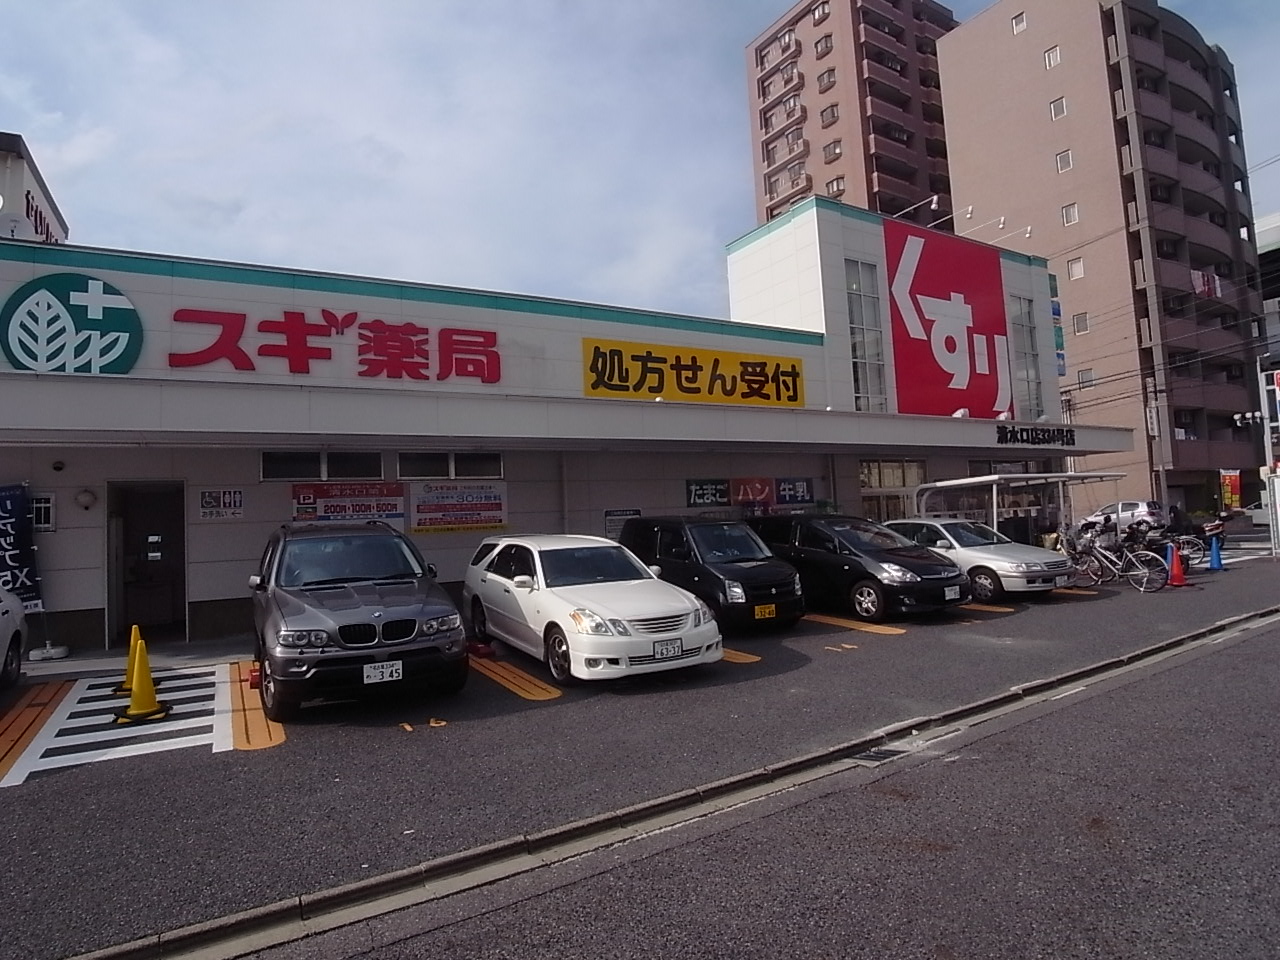 Dorakkusutoa. Cedar pharmacy Shimizuguchi shop 443m until (drugstore)